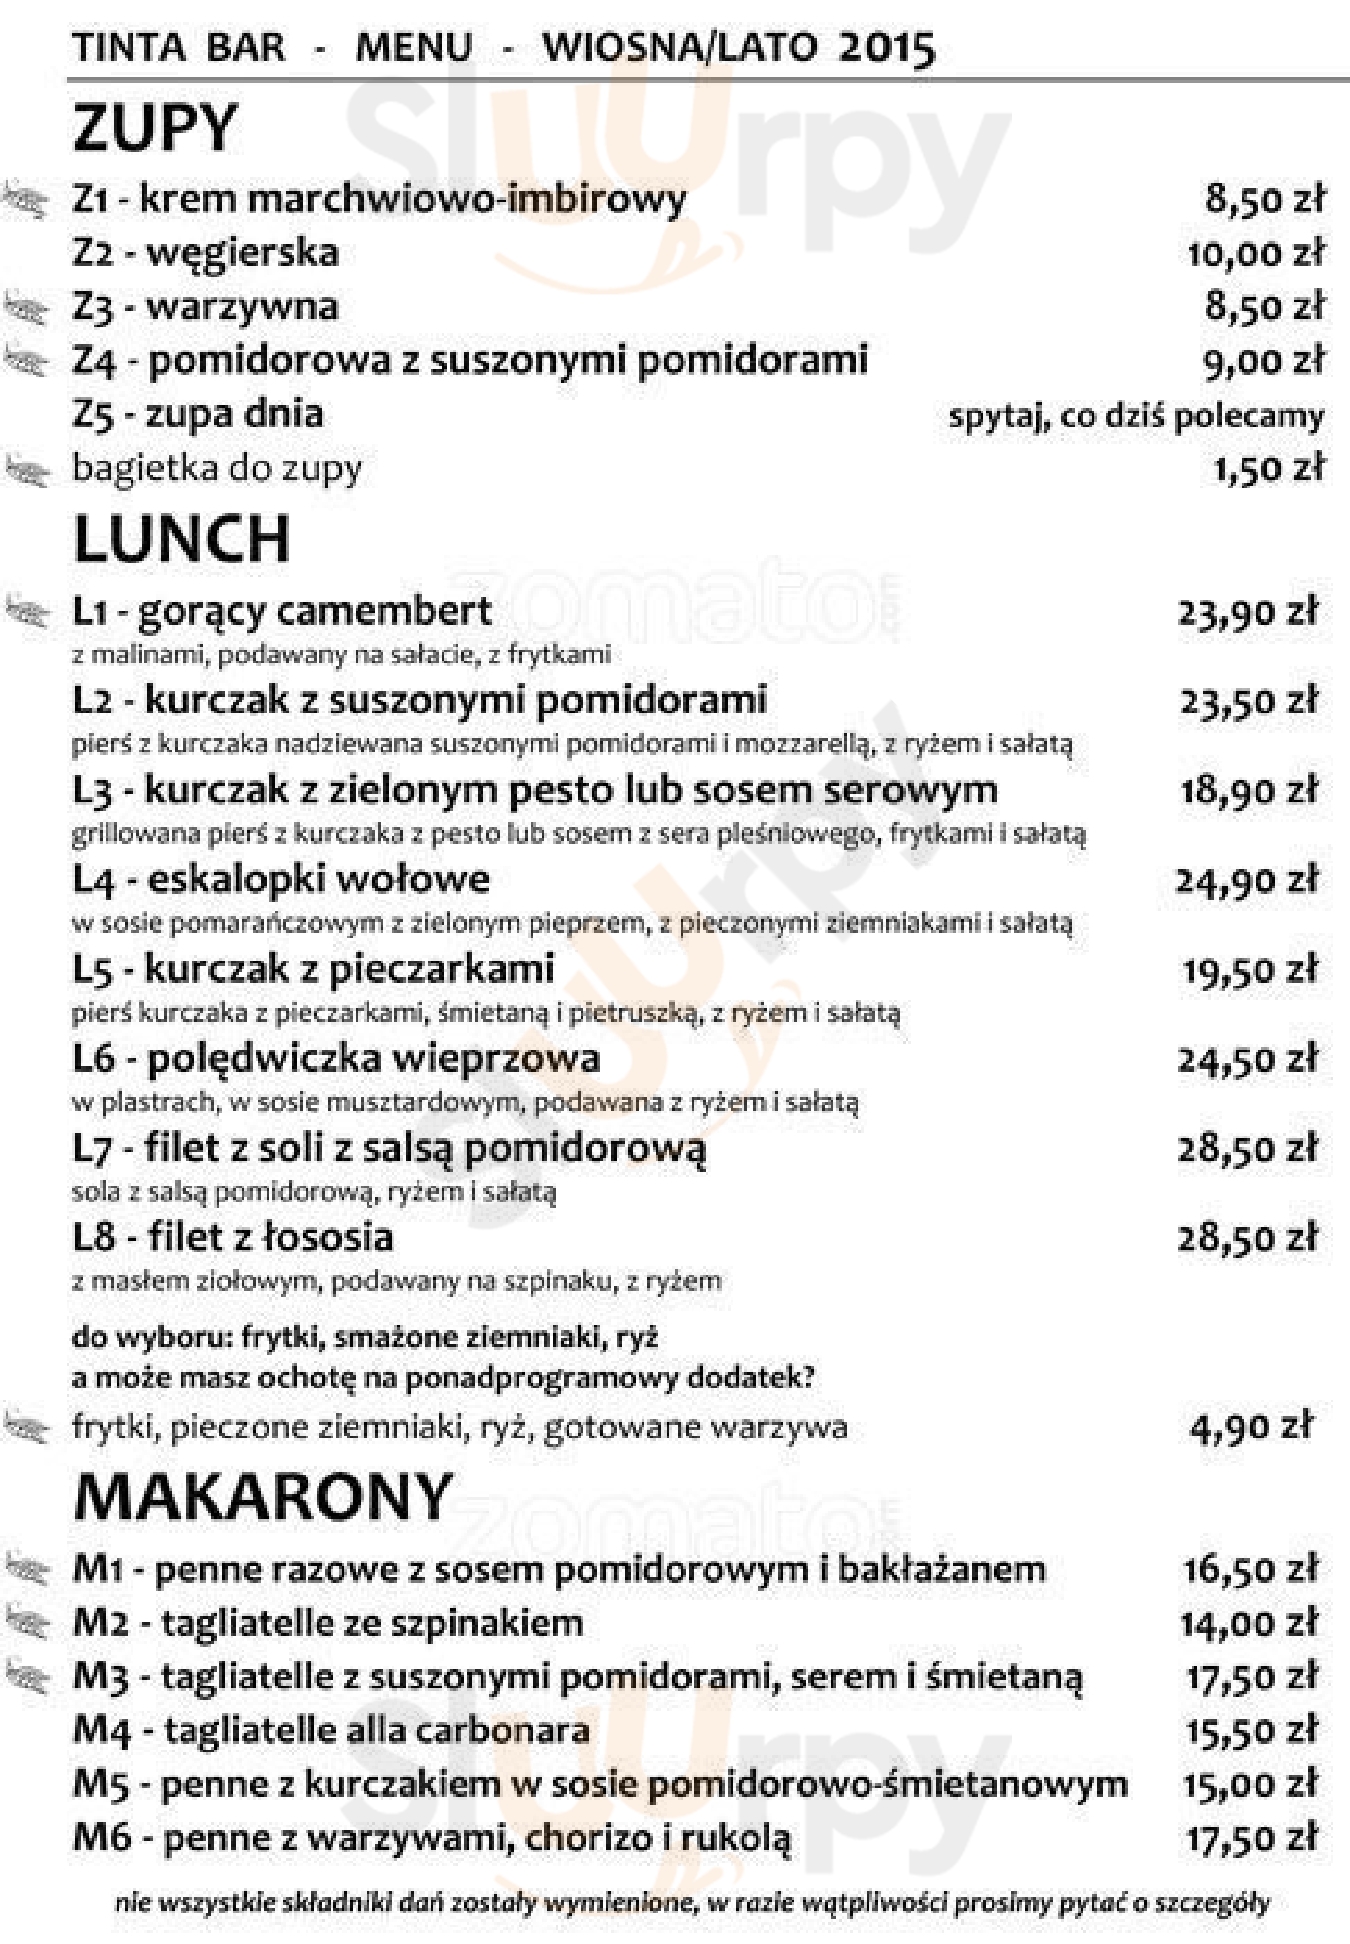 Tinta Bar - Restauracja Poznań Menu - 1